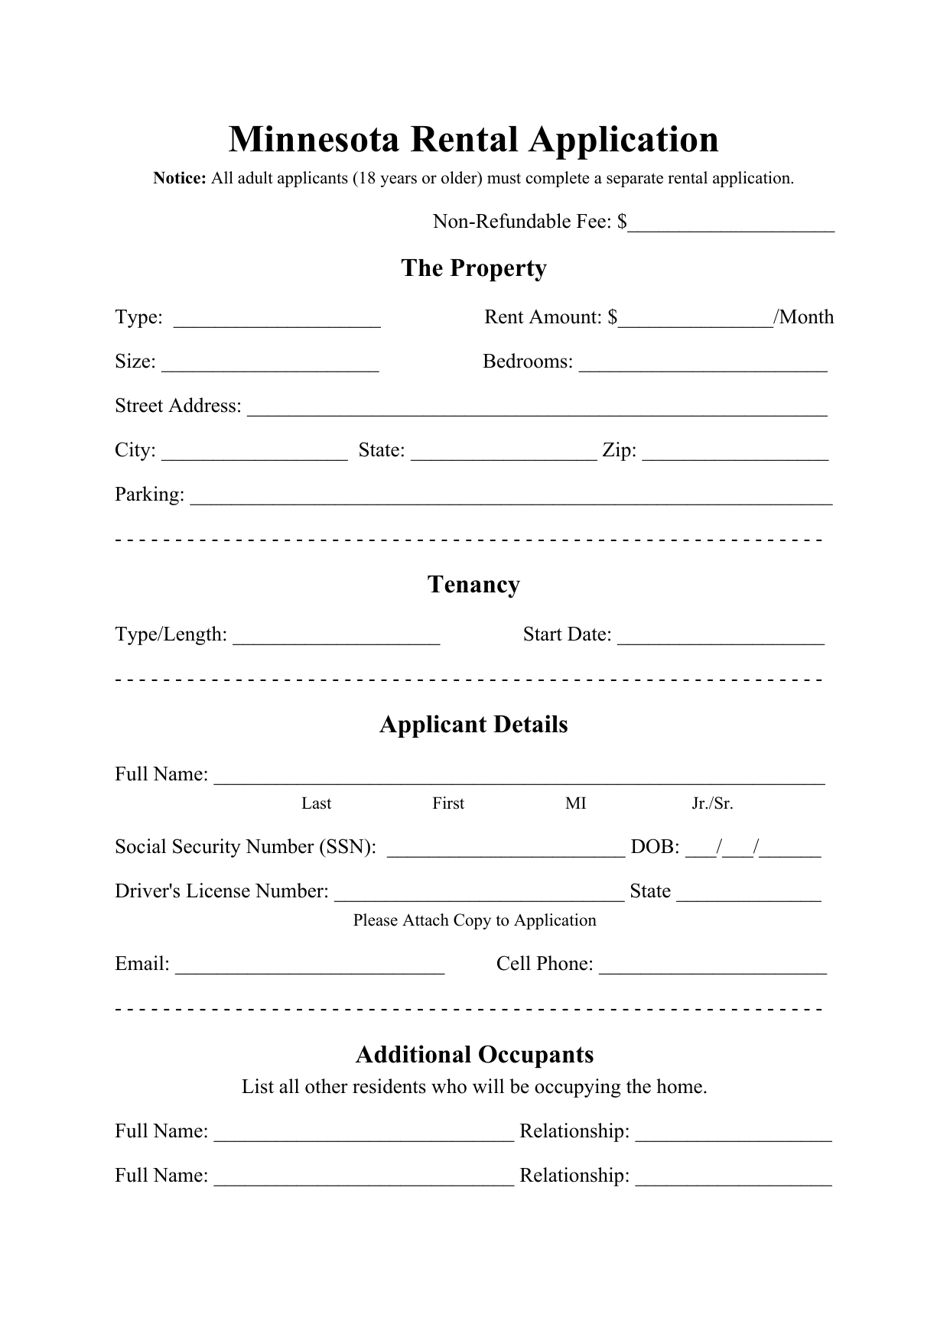 Rental Application Form - Minnesota, Page 1